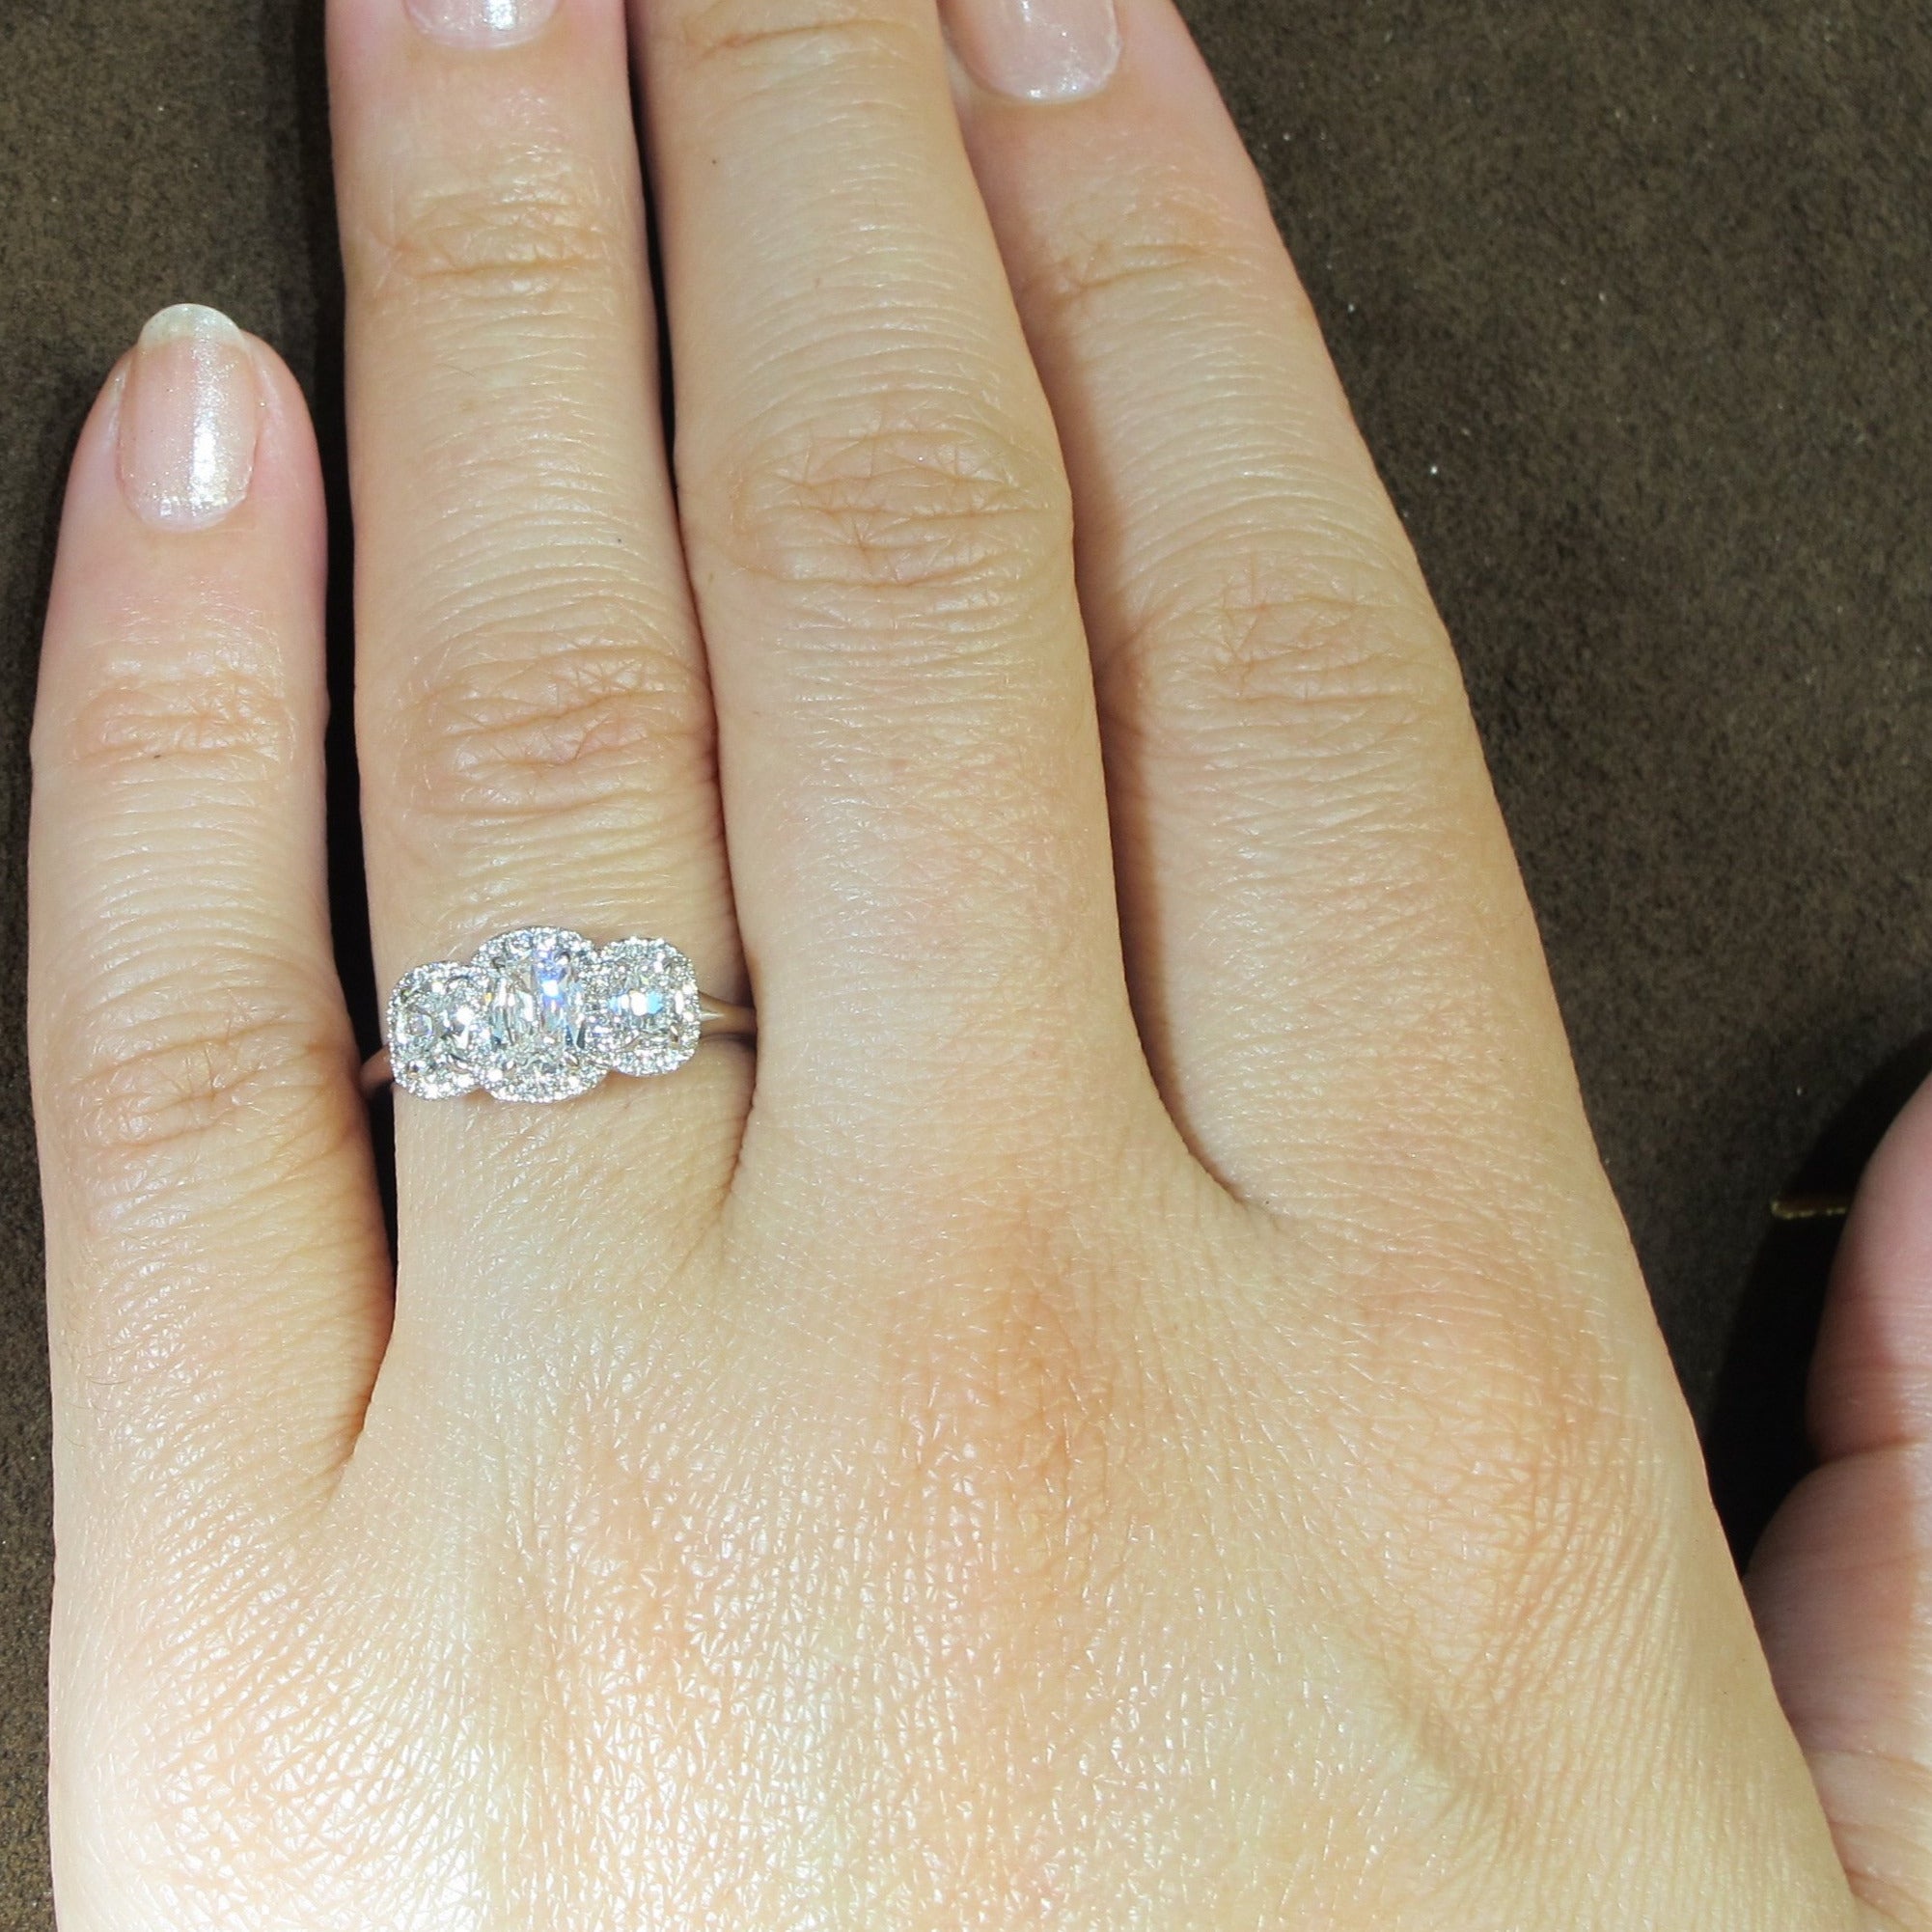 Henri Daussi Signed 0.66ctw Three Stone Cushion Cut Diamond Engagement Ring